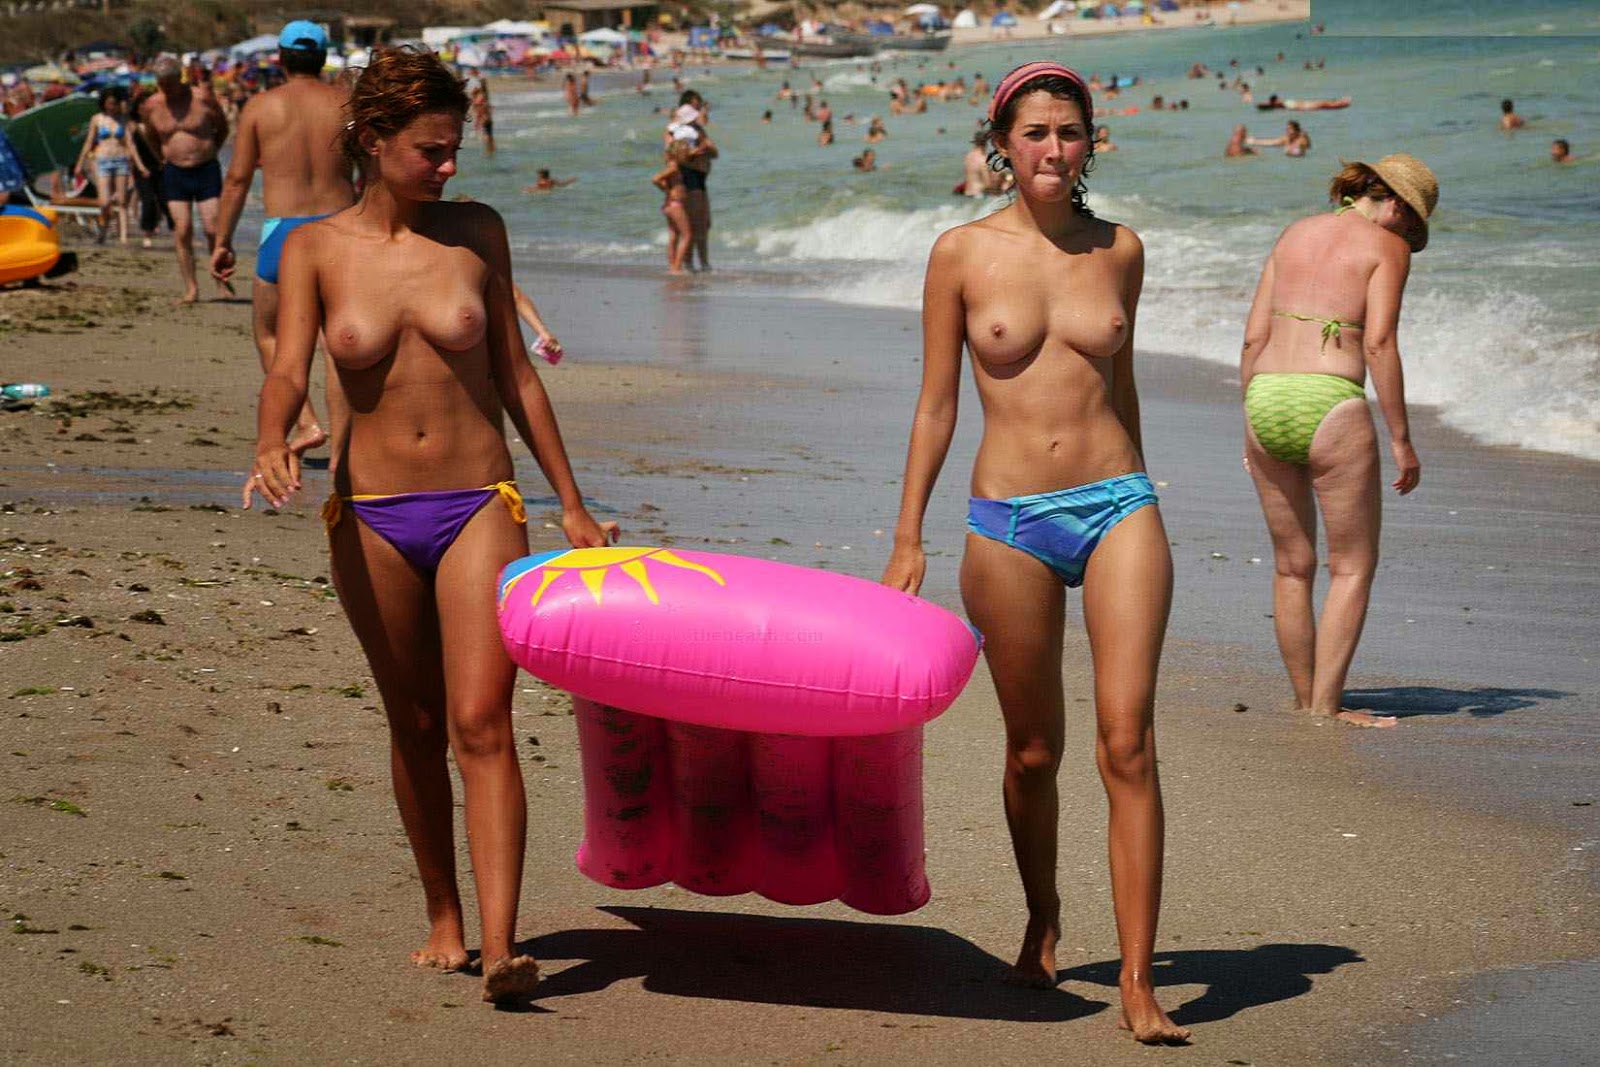 Beautful women at nude beaches - Naked photo